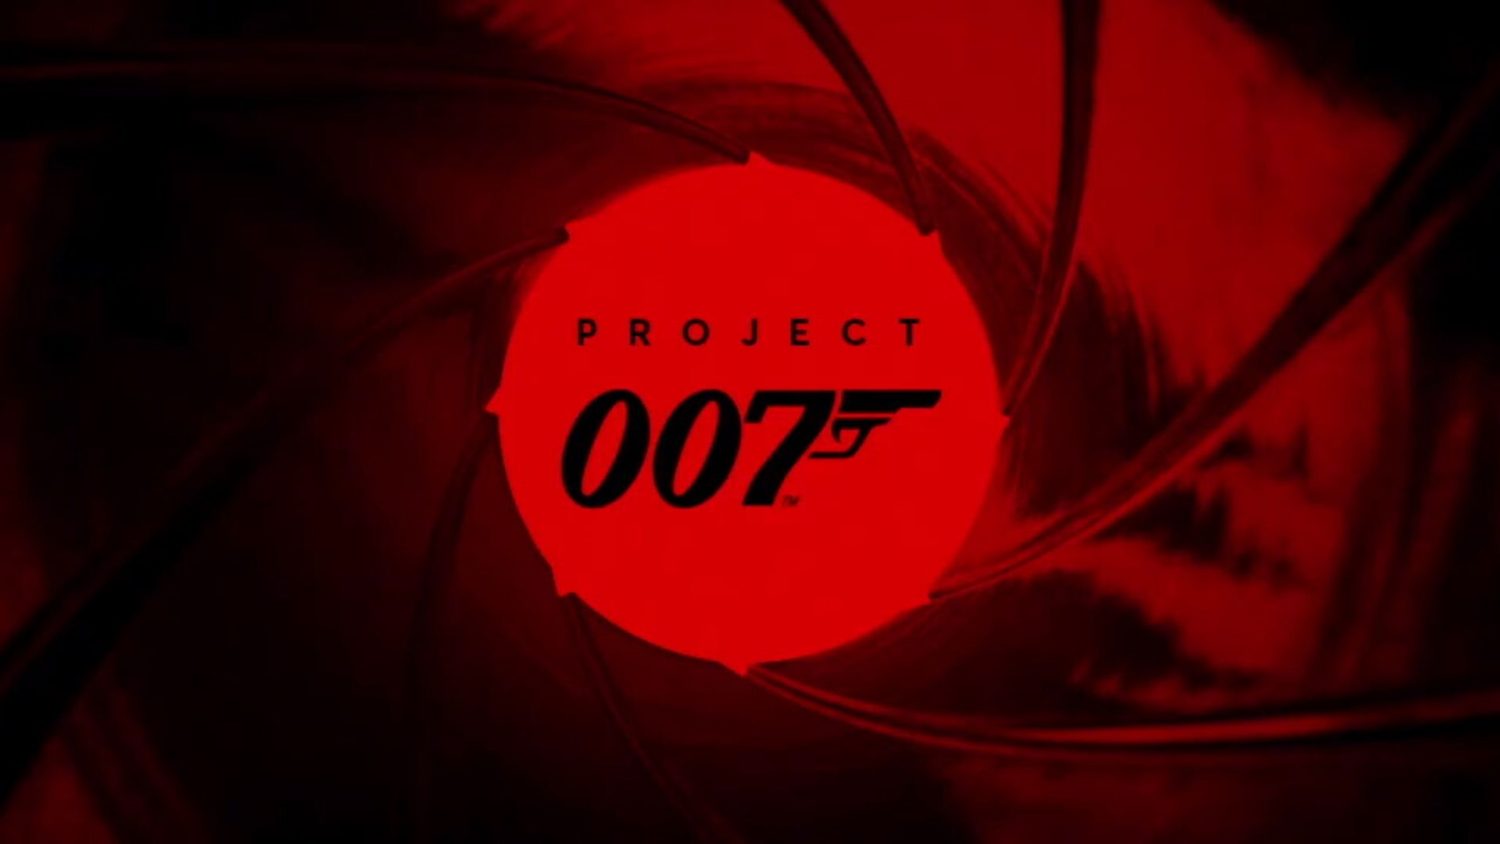 project 007 ioi